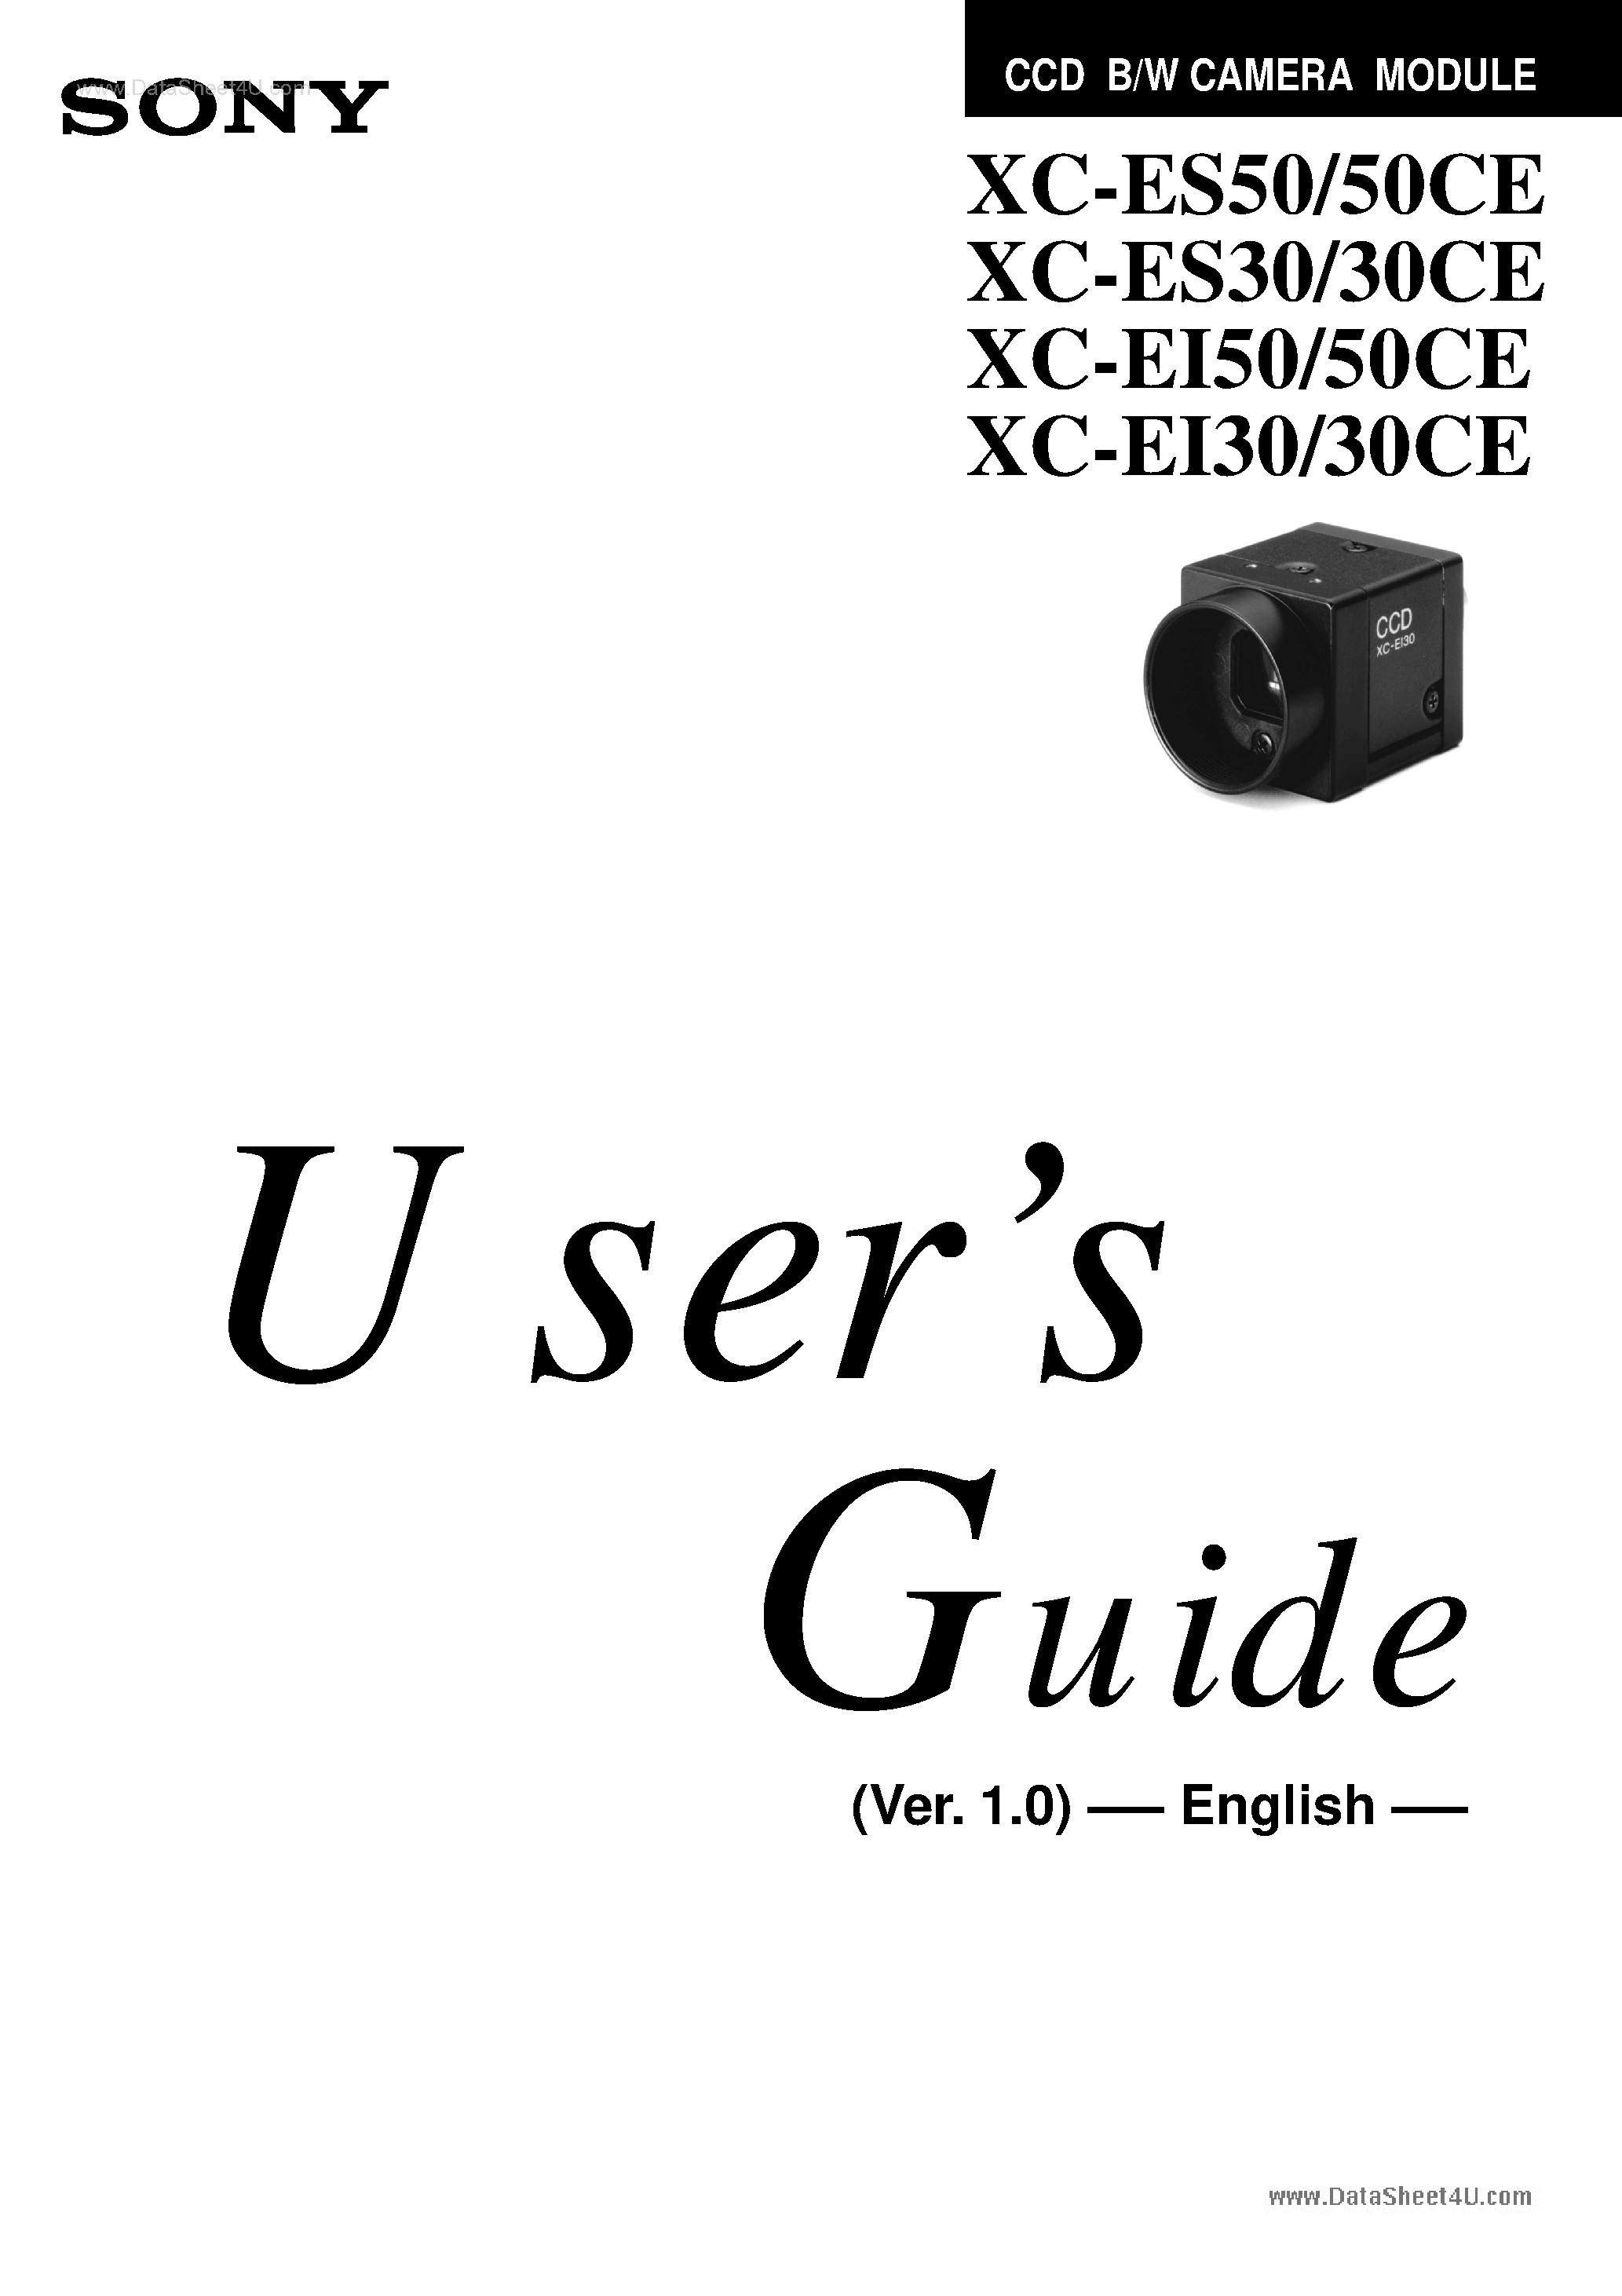 Даташит XC-EI30 - (XC-Exx0CE) CCD B/W Camera Module страница 1